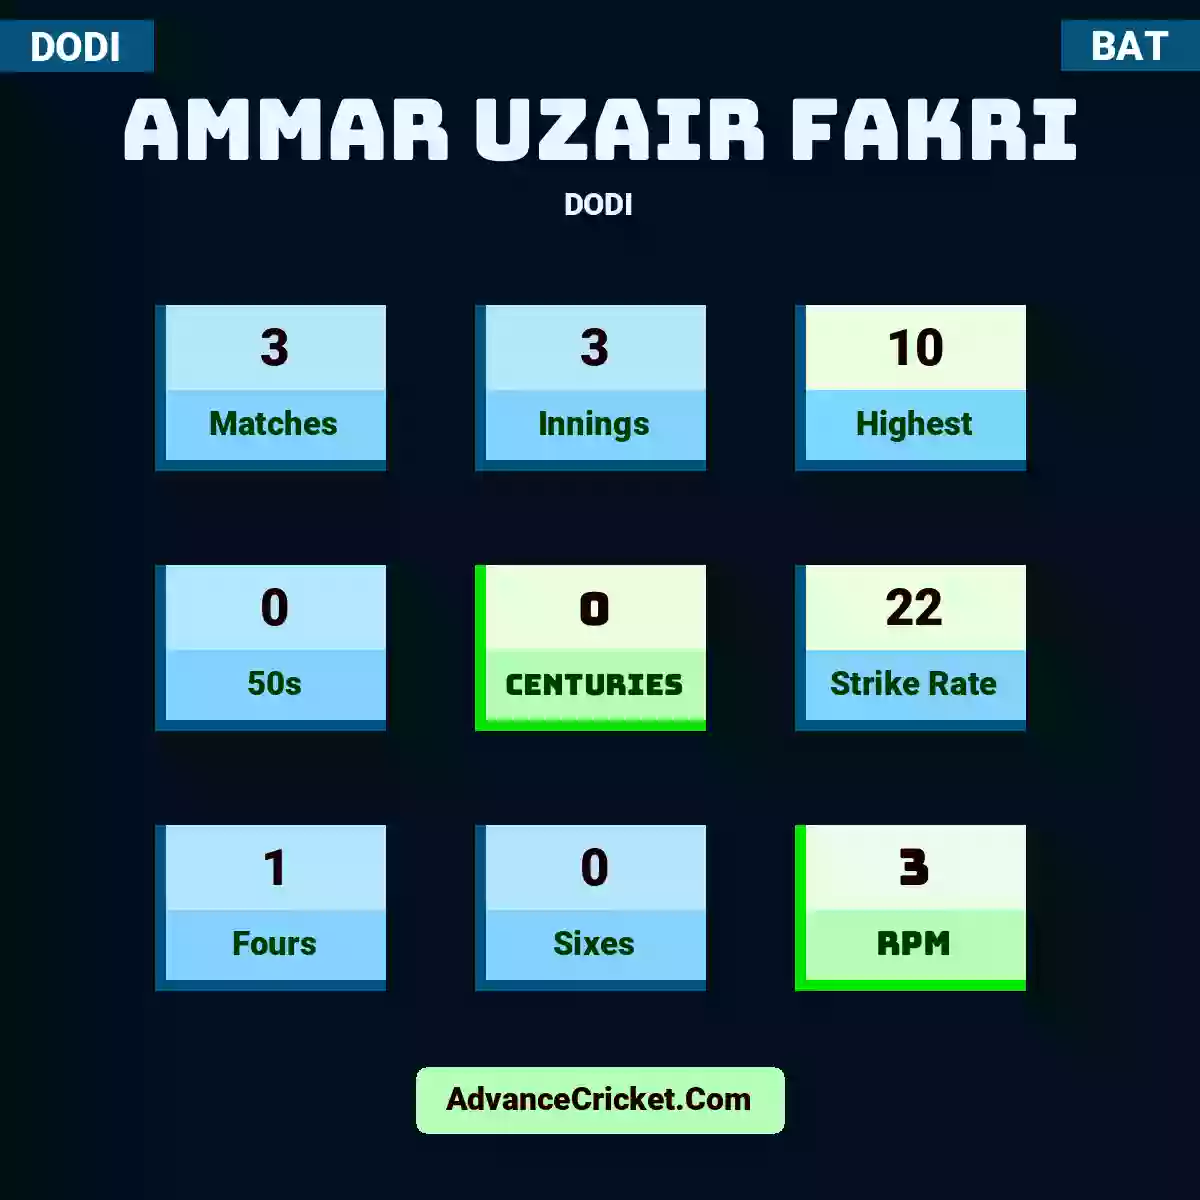 Ammar Uzair Fakri DODI , Ammar Uzair Fakri played 3 matches, scored 10 runs as highest, 0 half-centuries, and 0 centuries, with a strike rate of 22. A.Uzair.Fakri hit 1 fours and 0 sixes, with an RPM of 3.